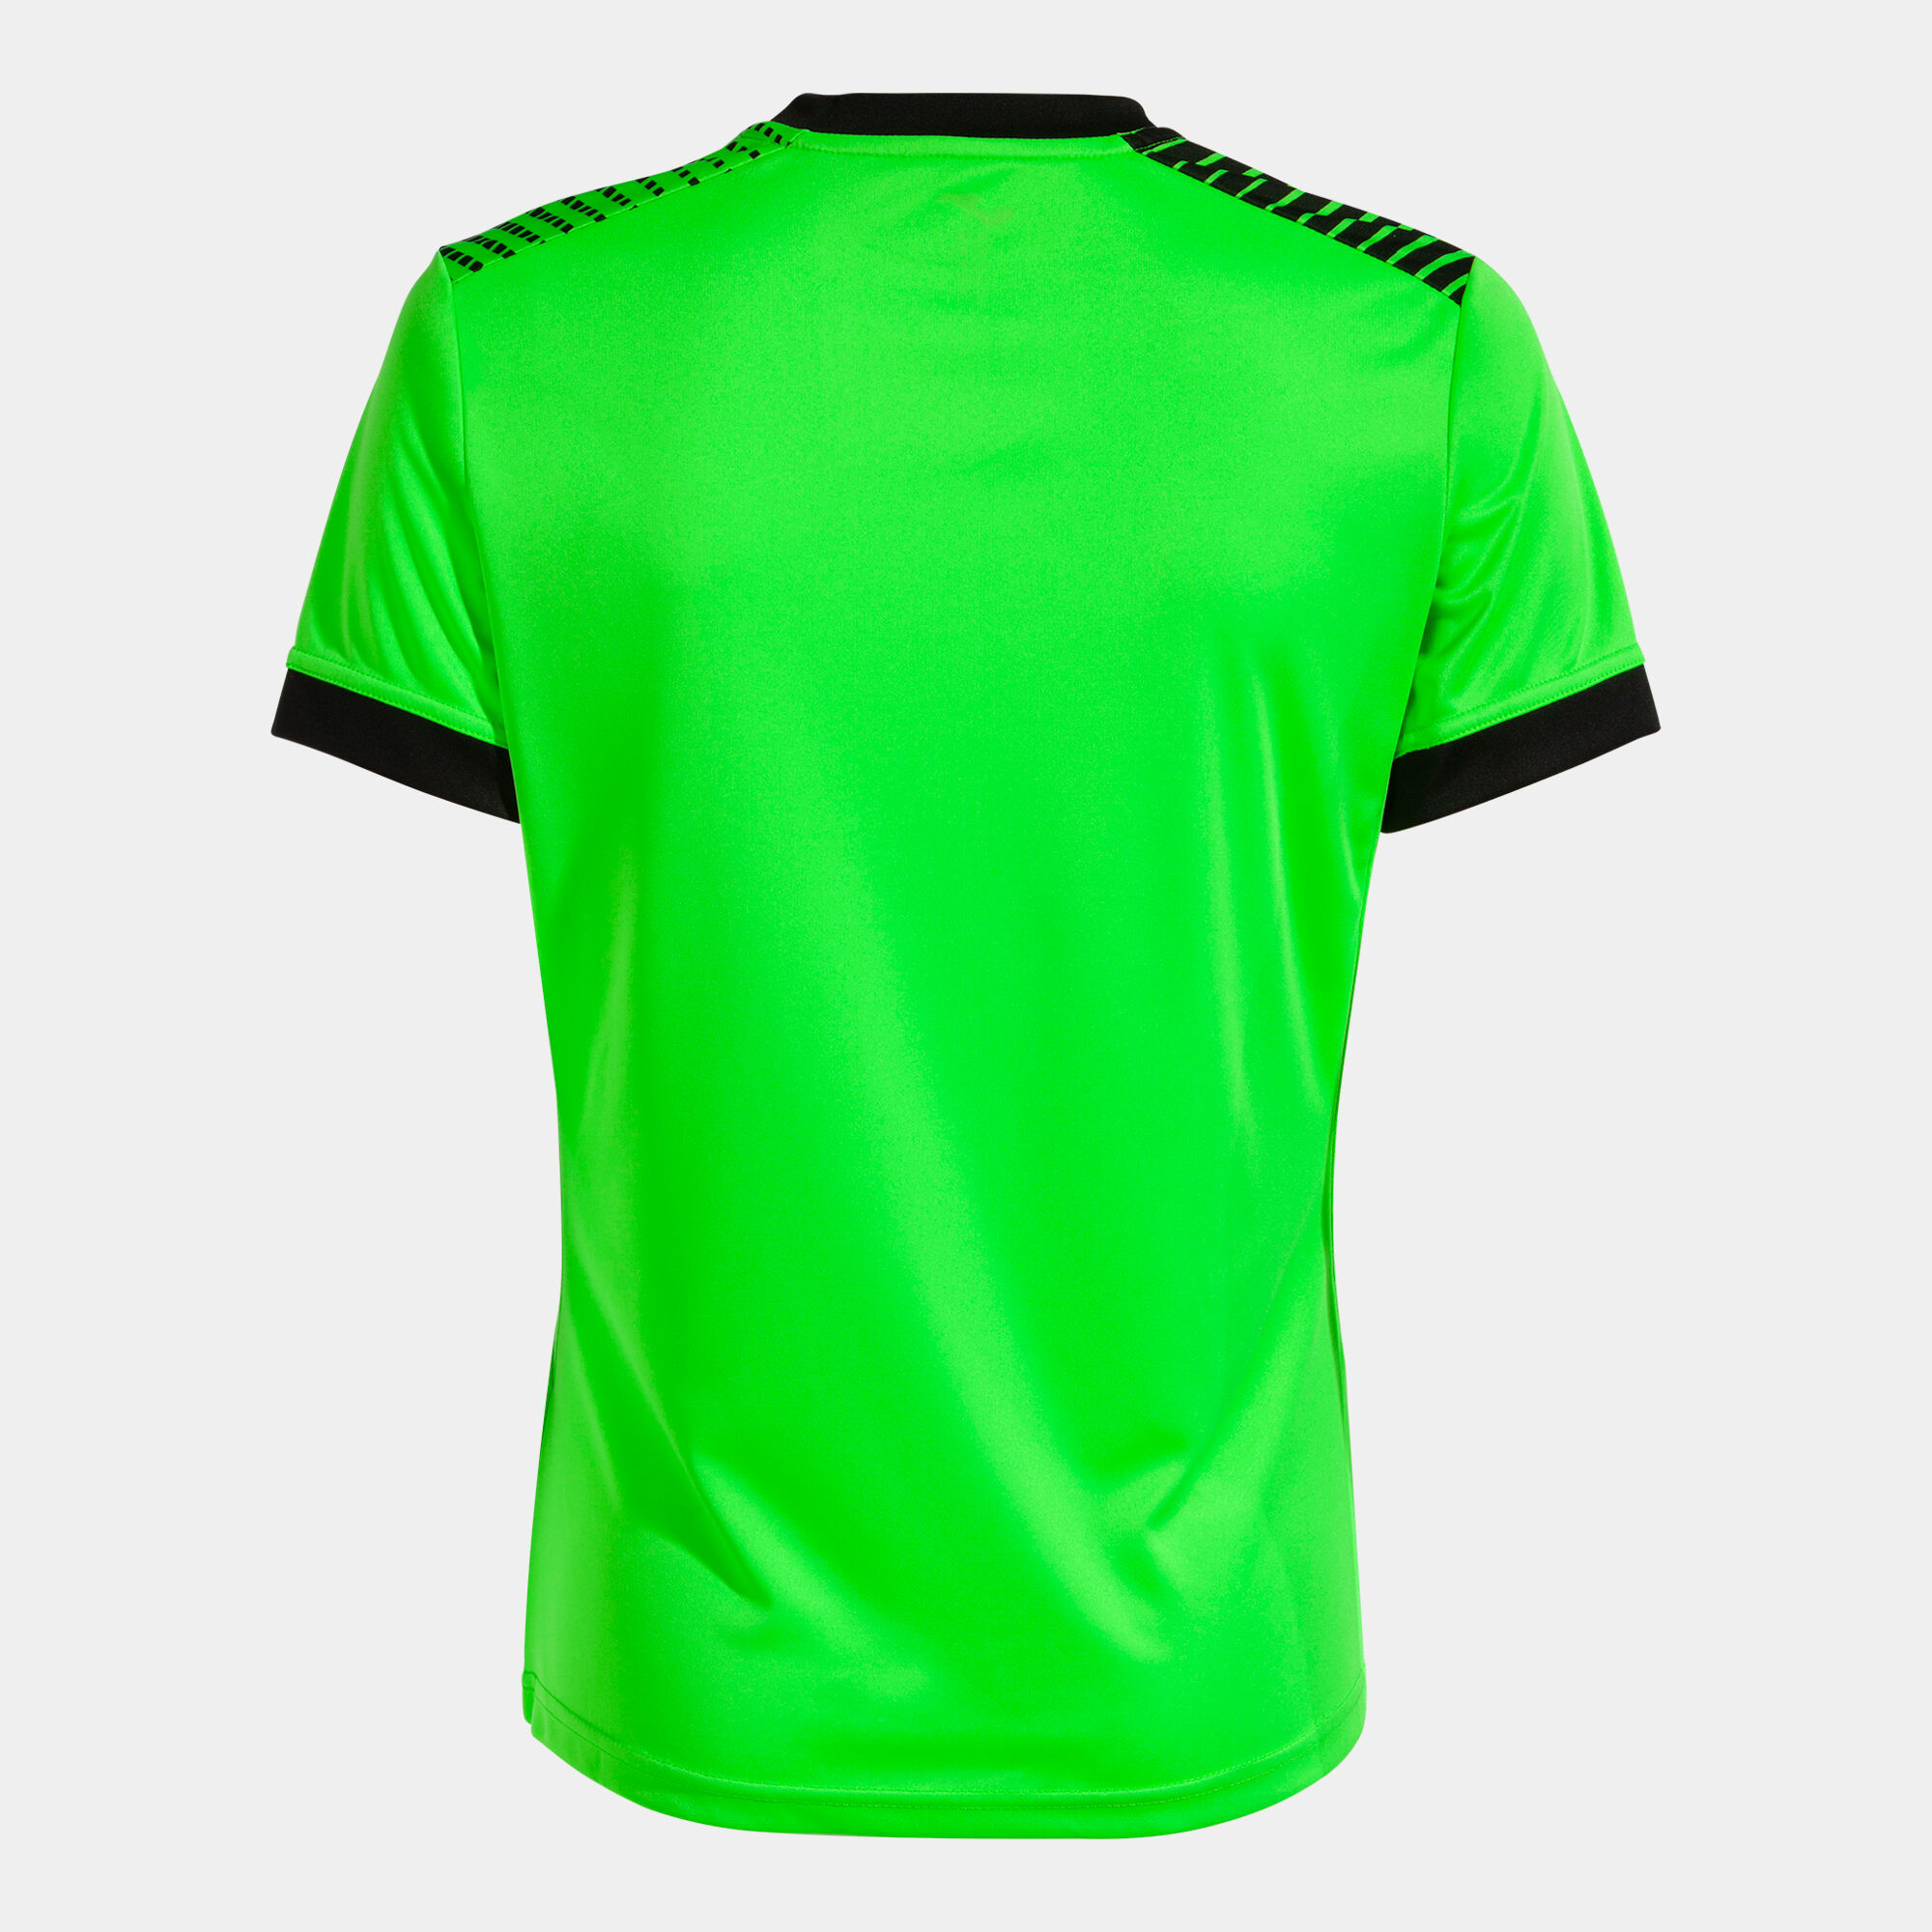 Shirt short sleeve woman Eco Supernova fluorescent green black